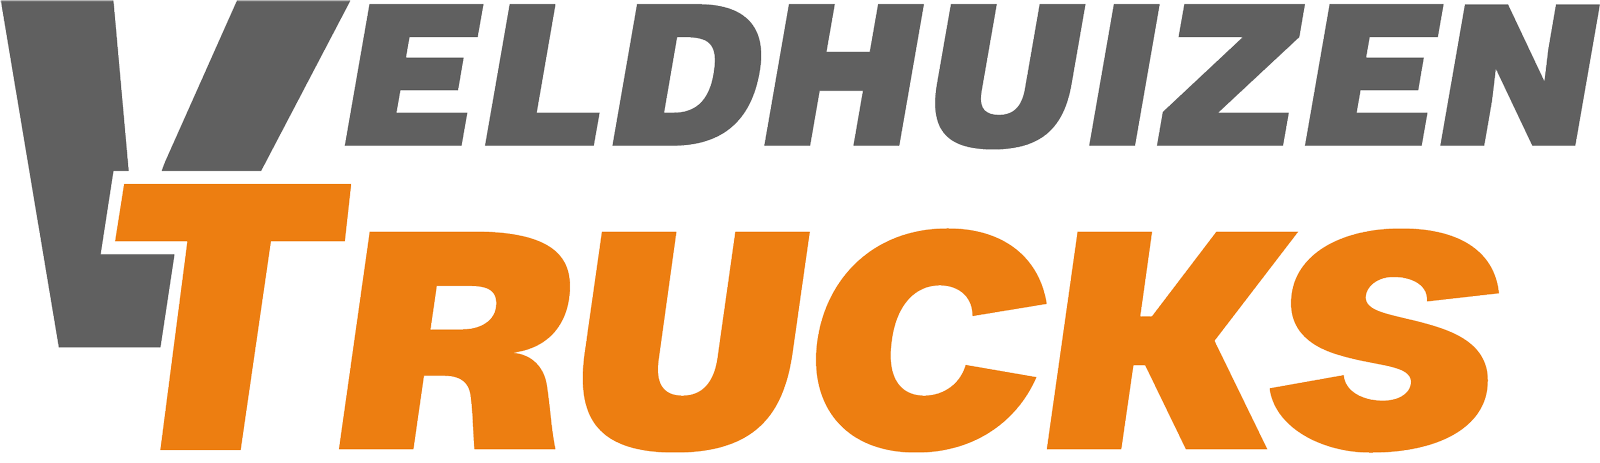 veldhuzien-trucks-logo-1600-v1.png